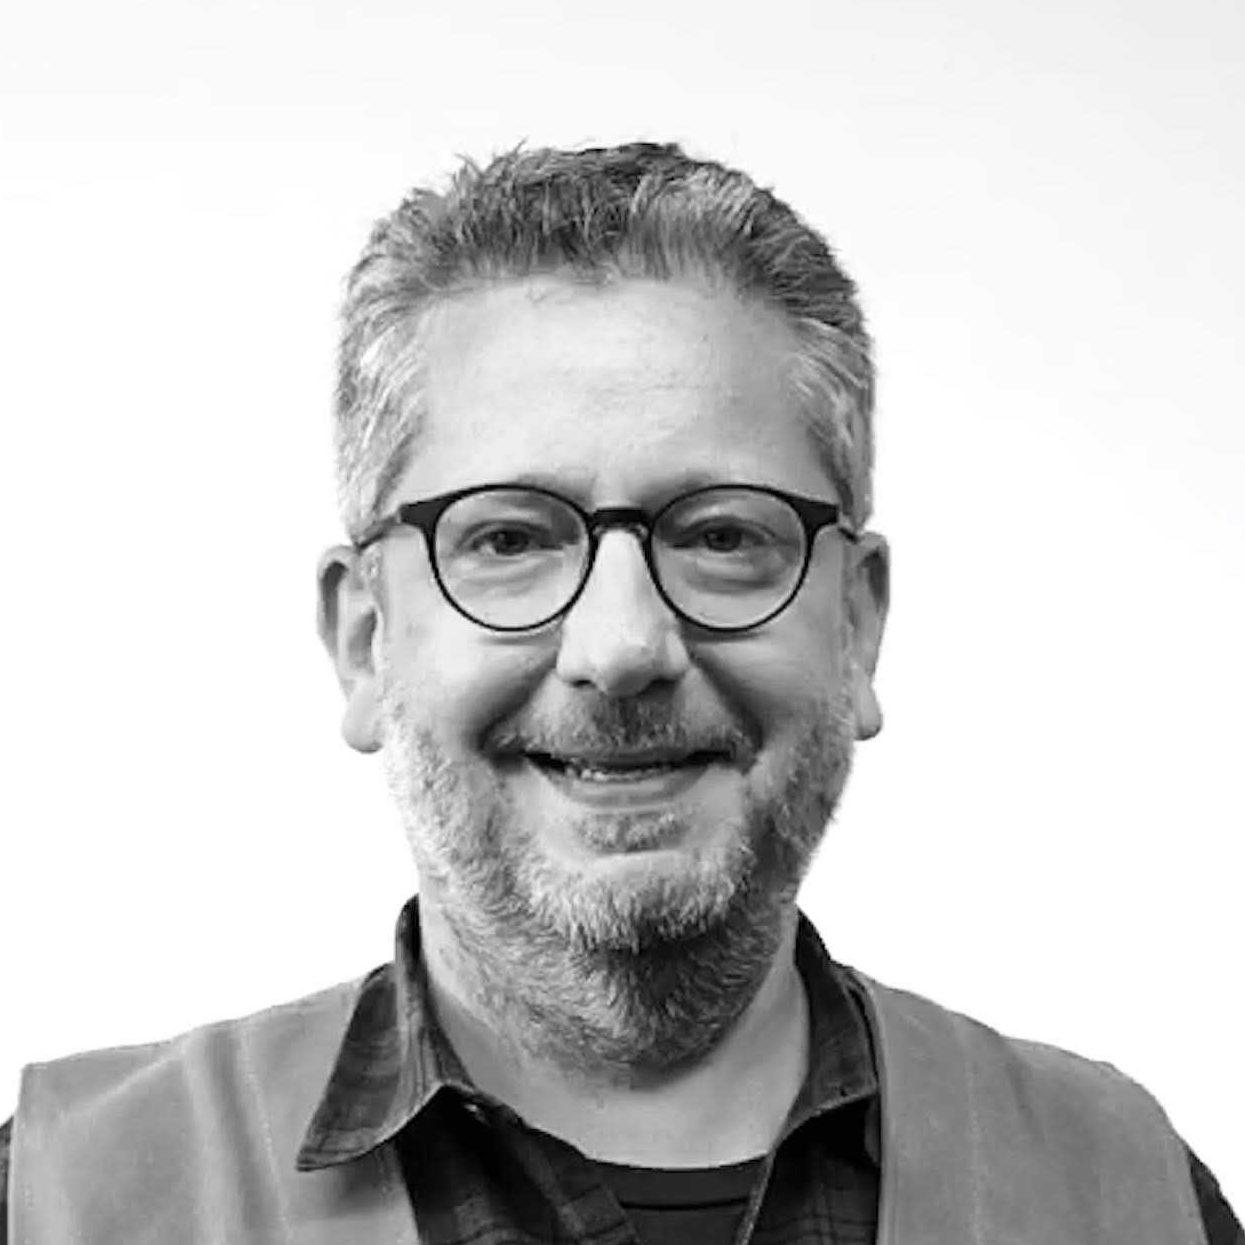 Peter Stern, Head of Design & Partner at Blink.